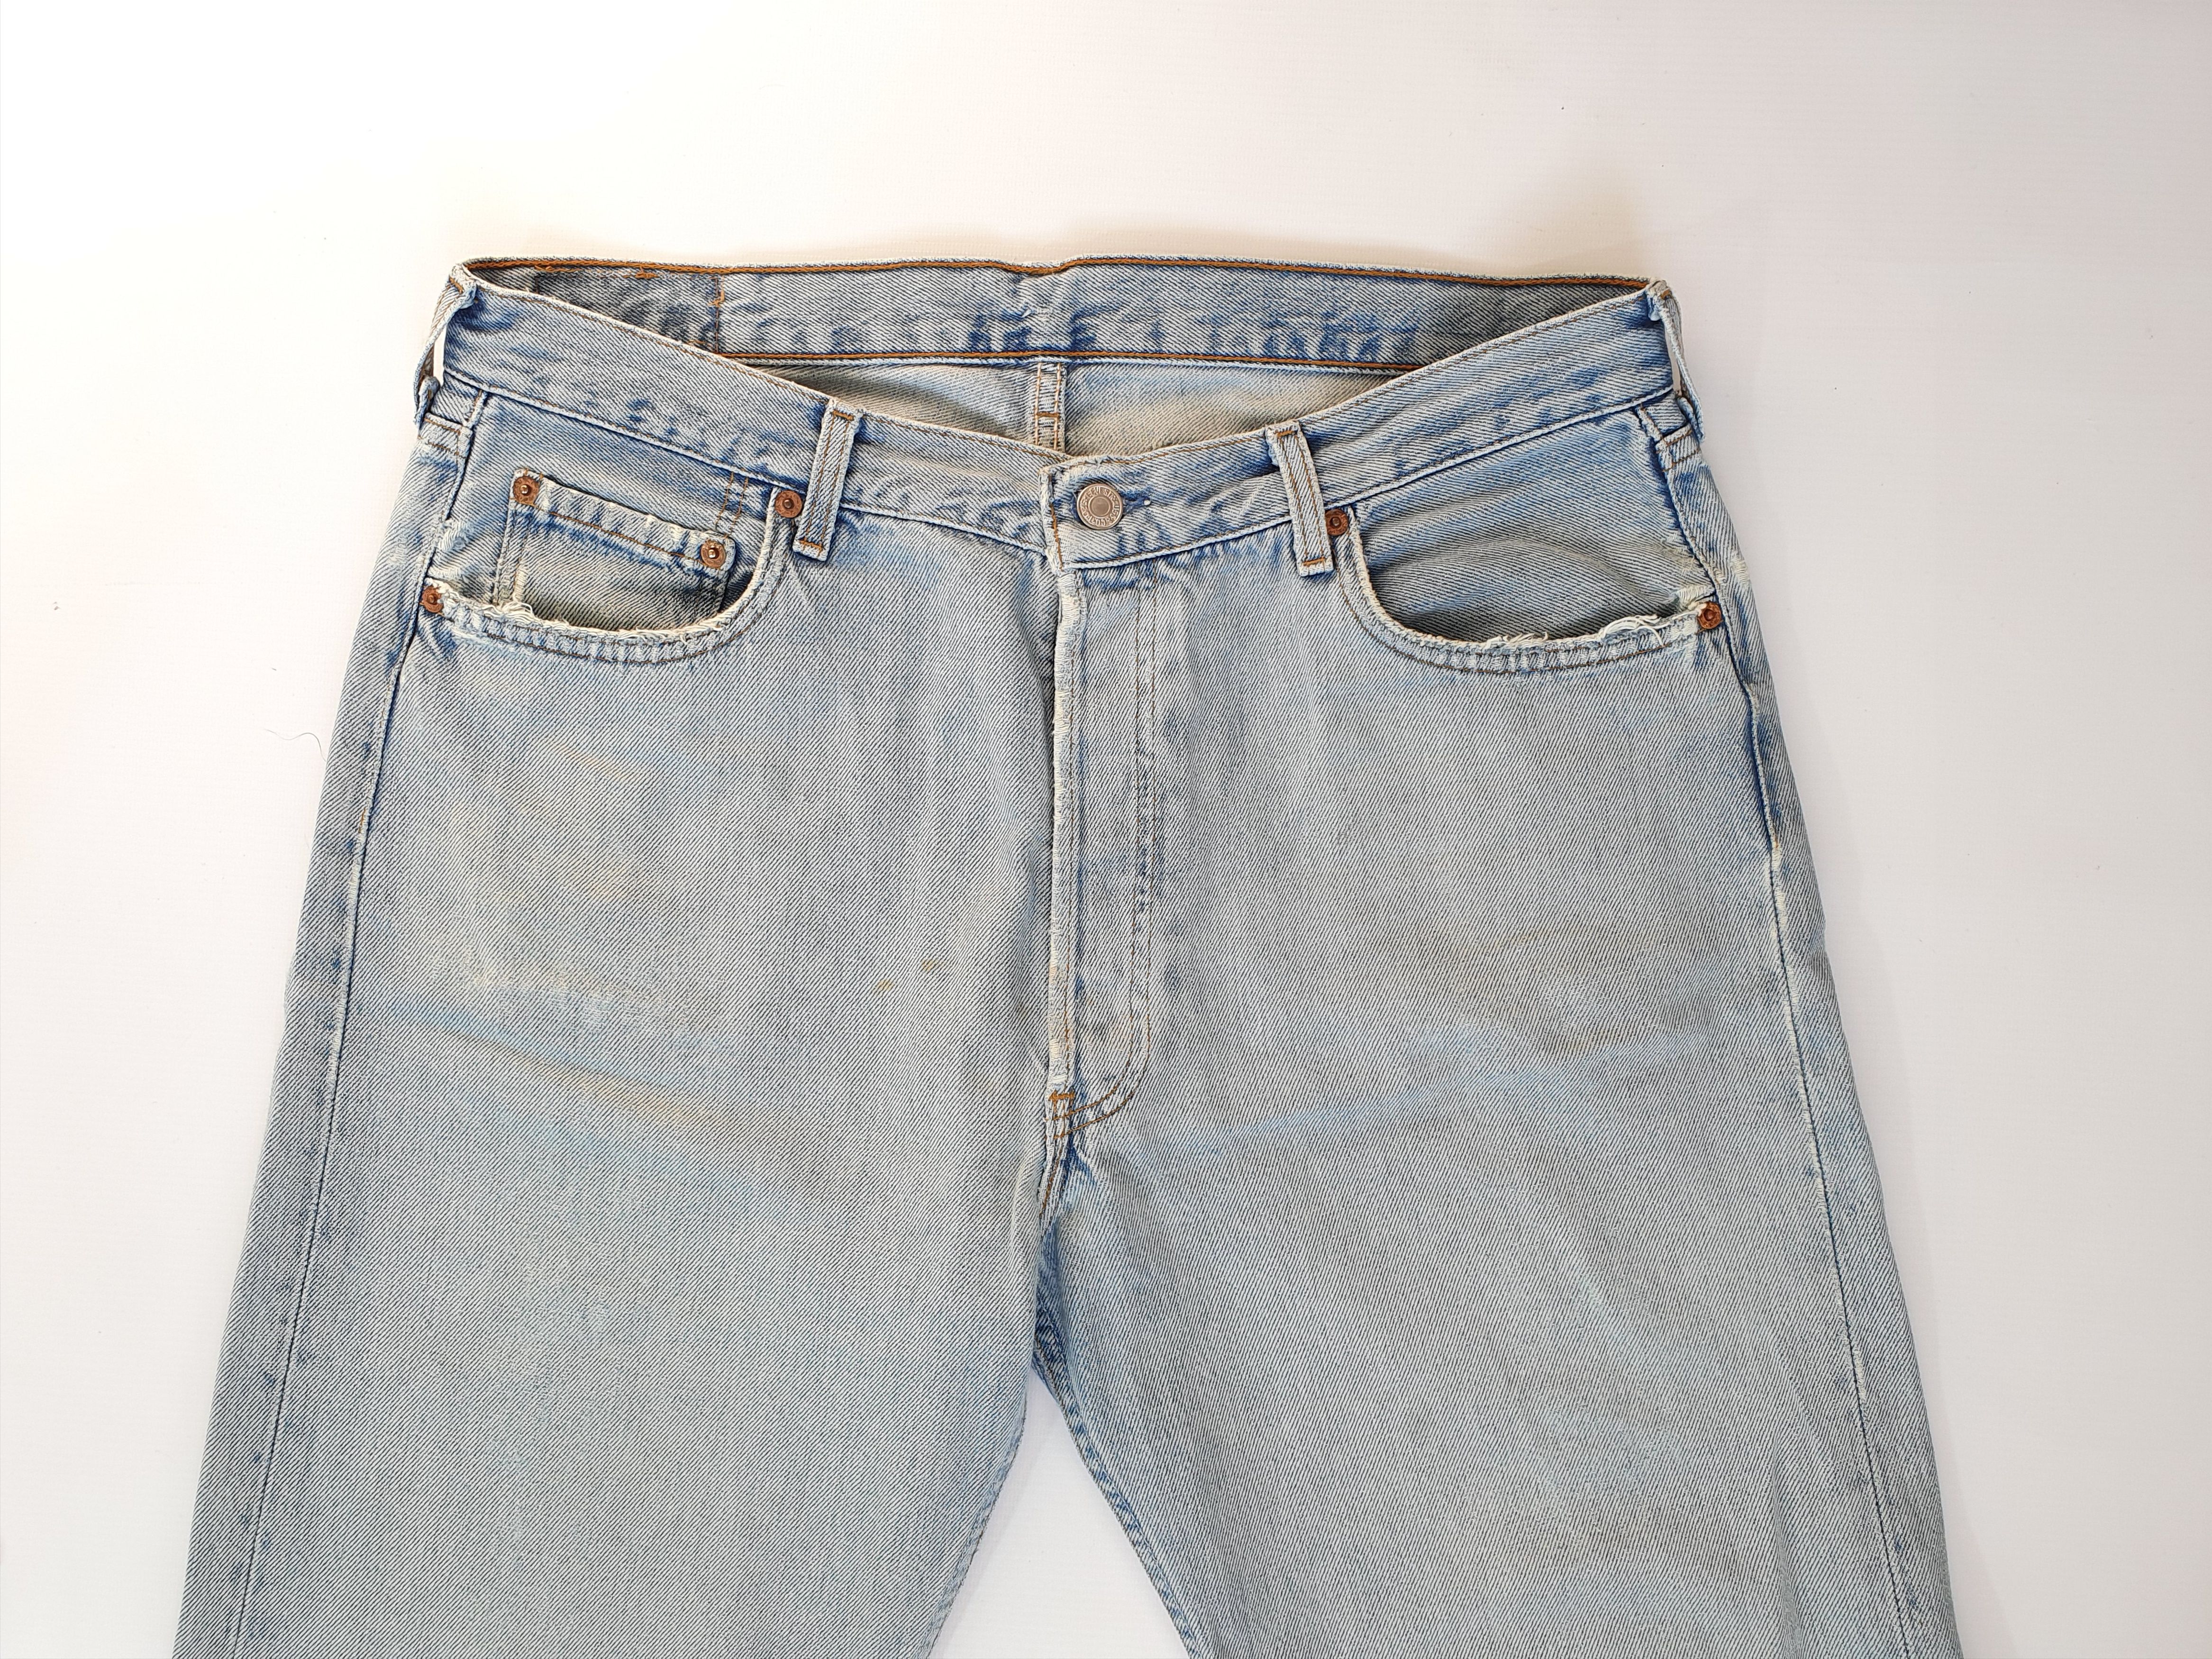 Vintage 1994 Vintage LEVIS 501 Dirty Distressed Jeans Size US 33 - 4 Thumbnail